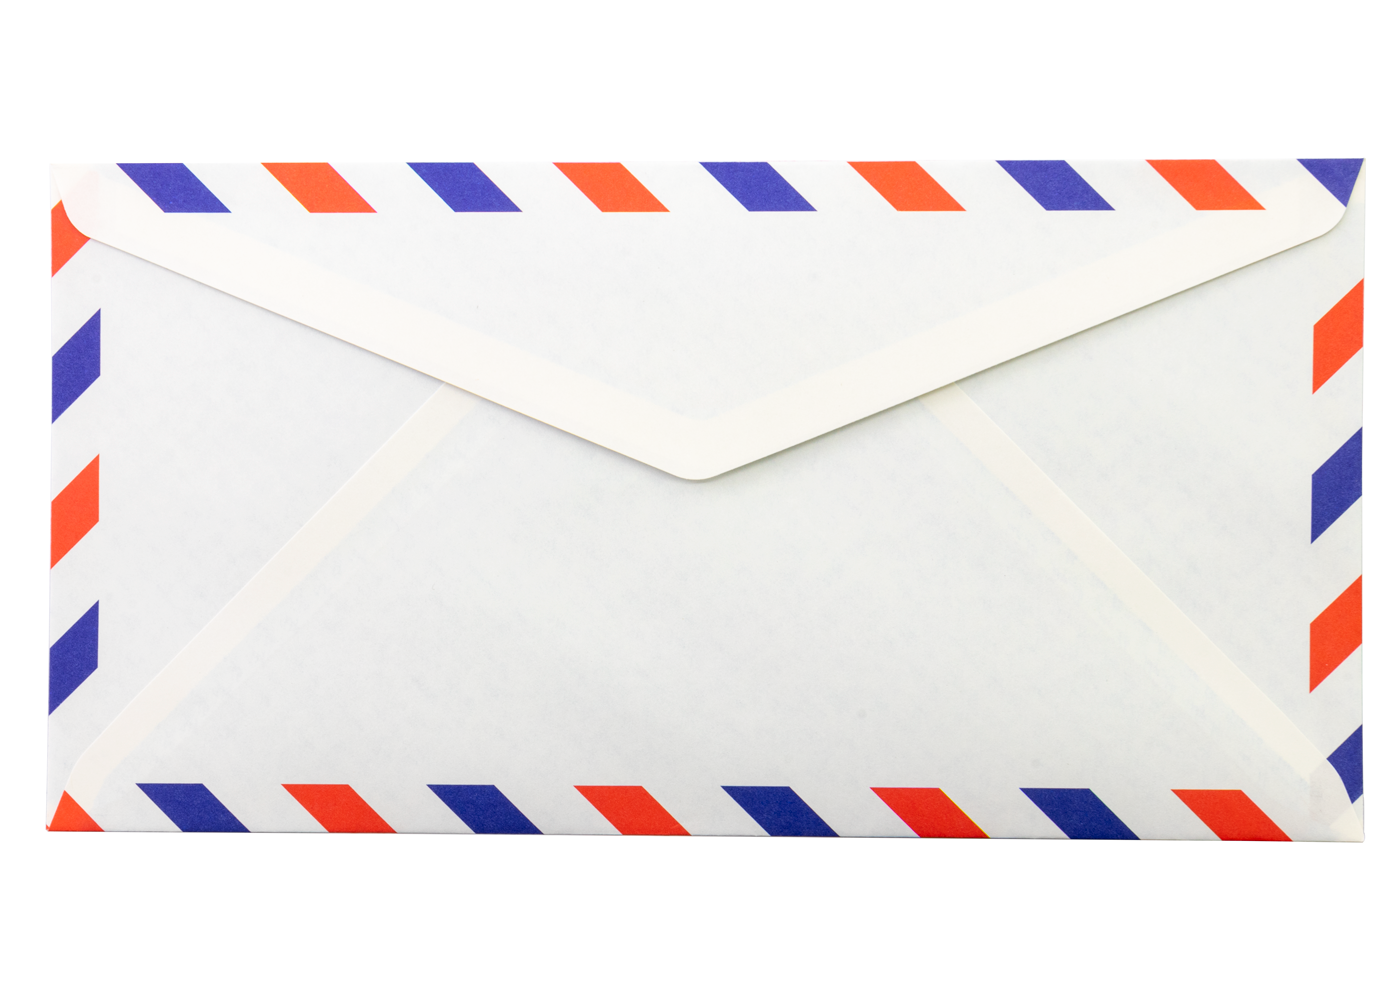 Life Stationery Airmail Envelopes